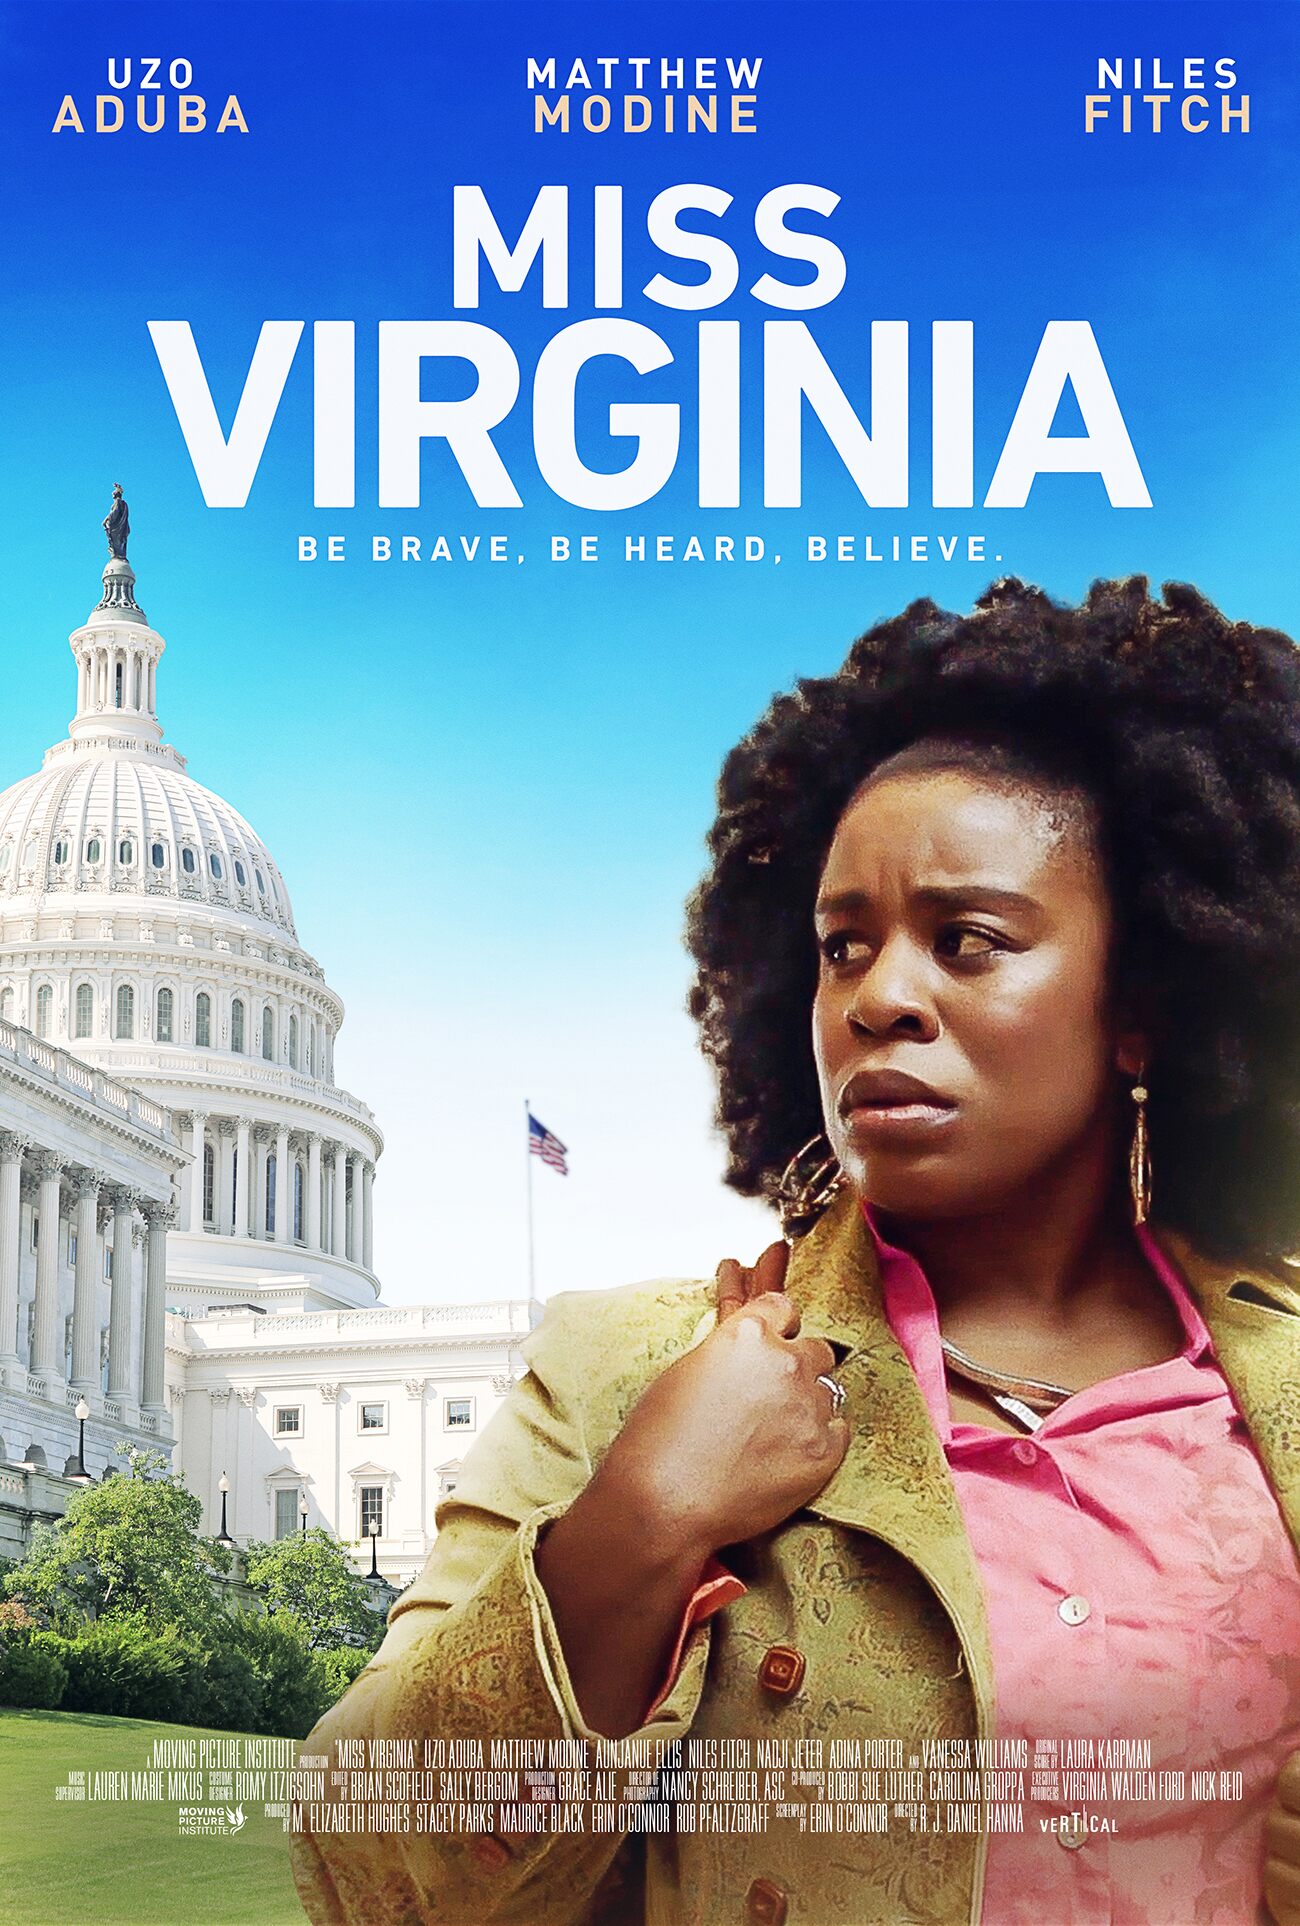 Poster for Miss virgina film